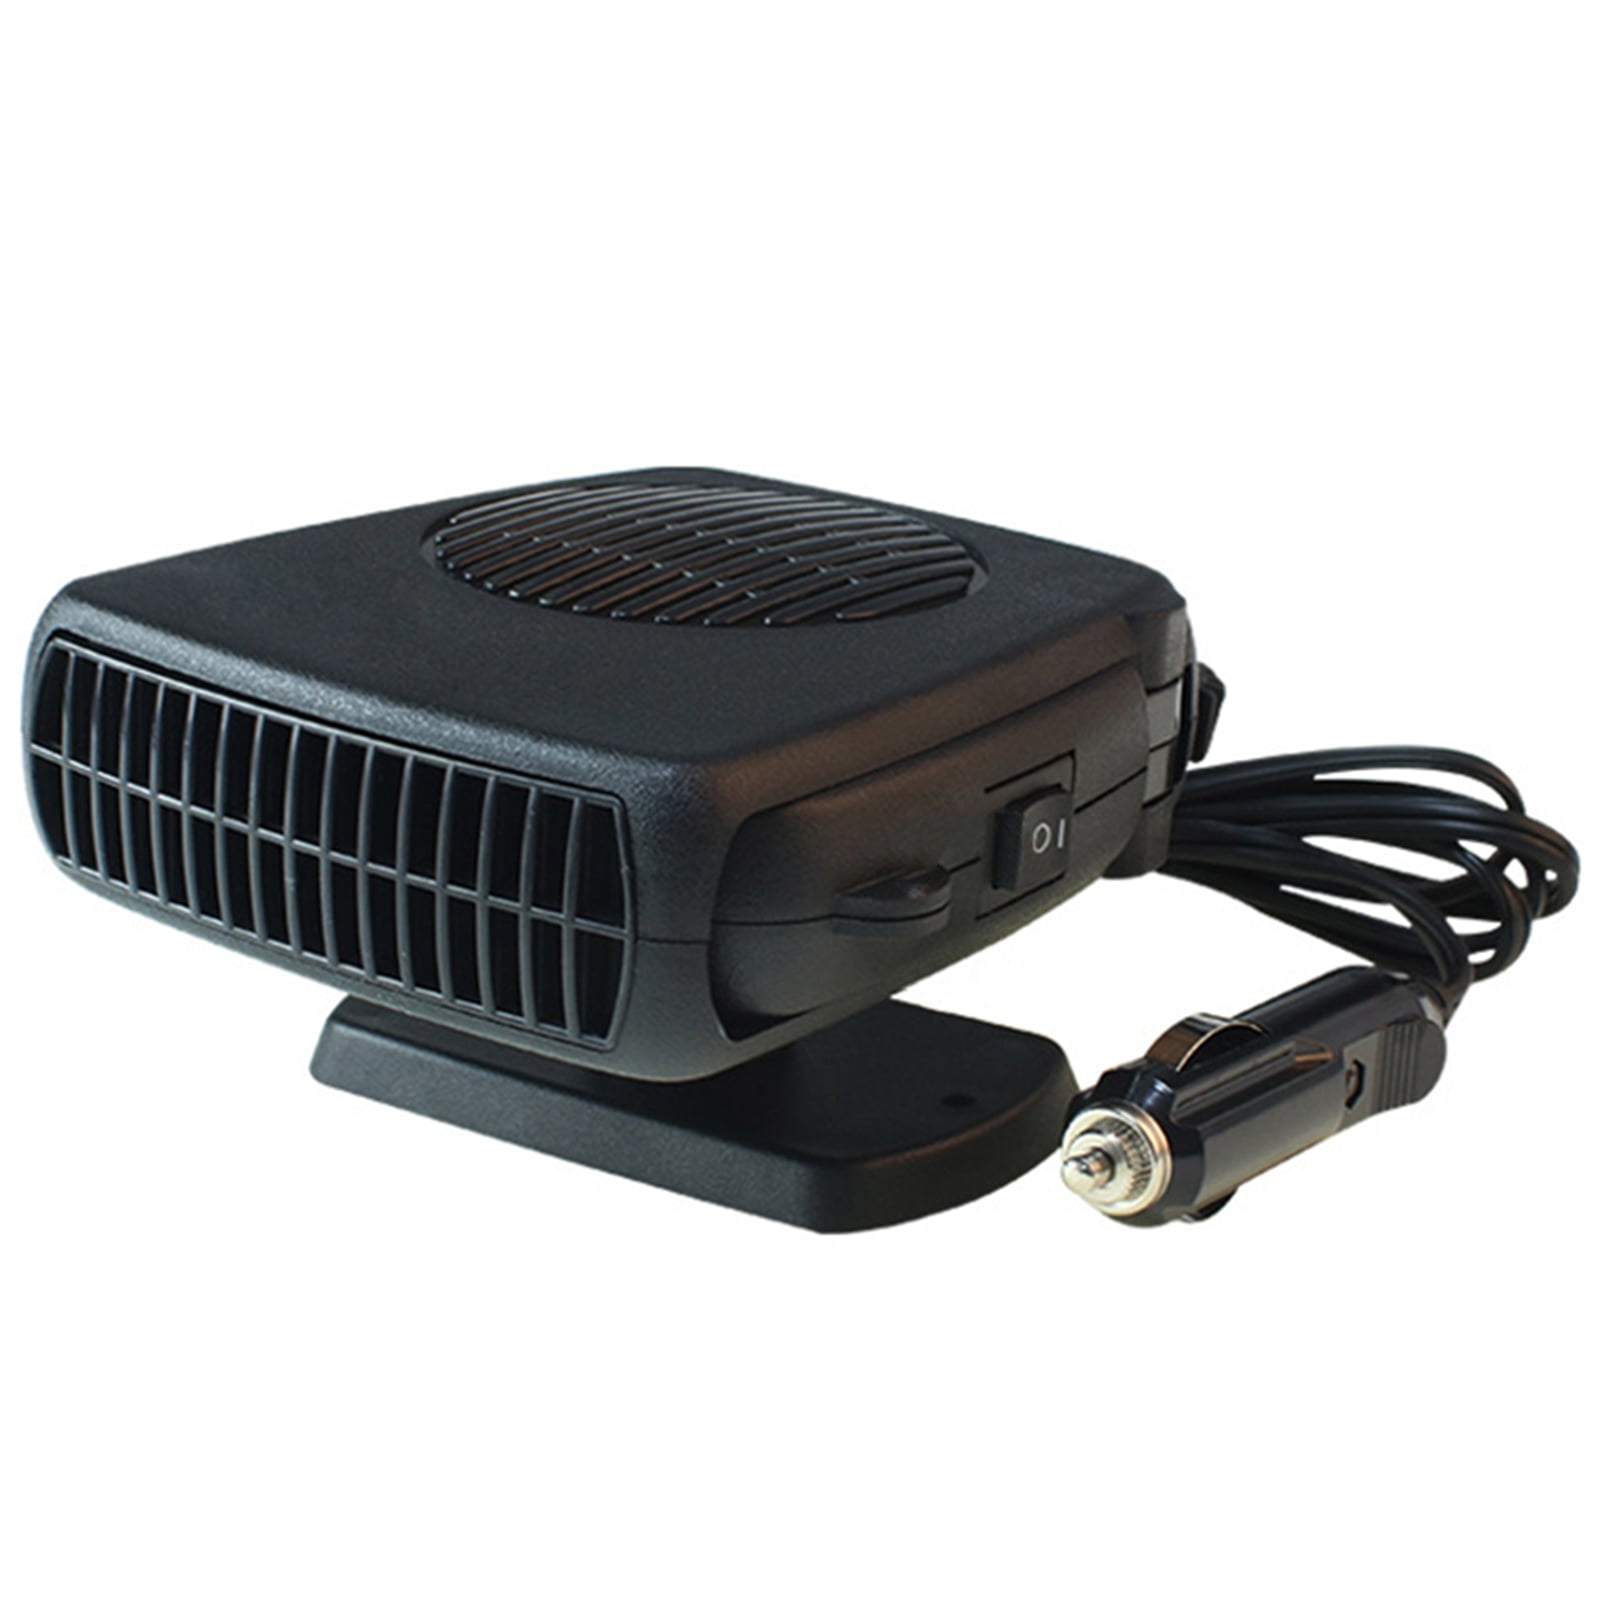 Portable Defrost & Defog Car Heater – Last Chance Order